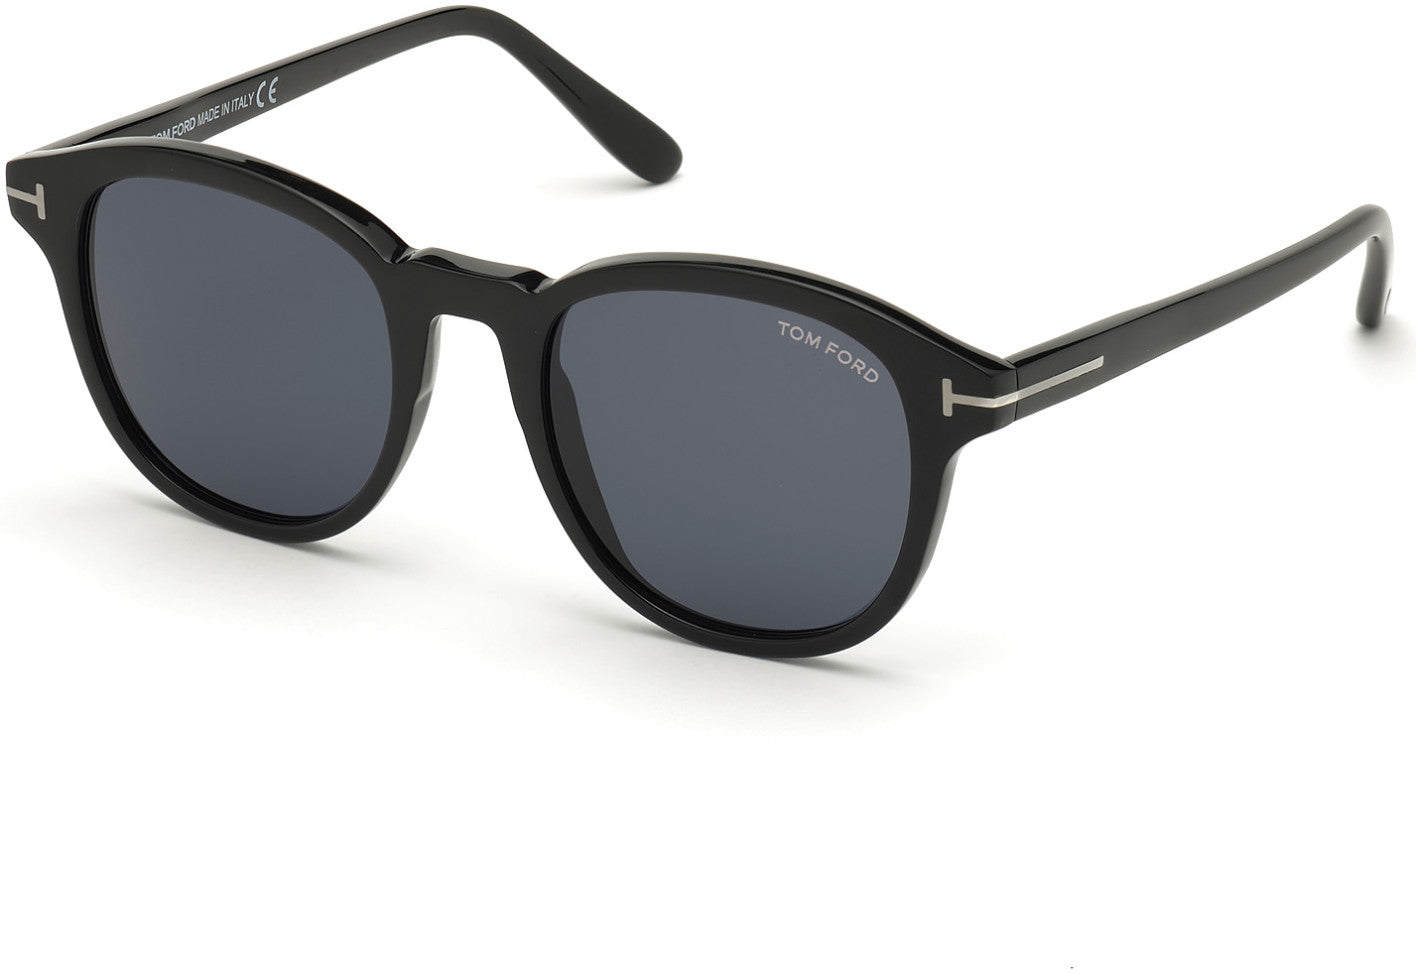 Tom Ford FT0752-N Jameson Round Sunglasses 01A-01A - Shiny Black/ Smoke Lenses/ Shiny Black "t" Temple Detail